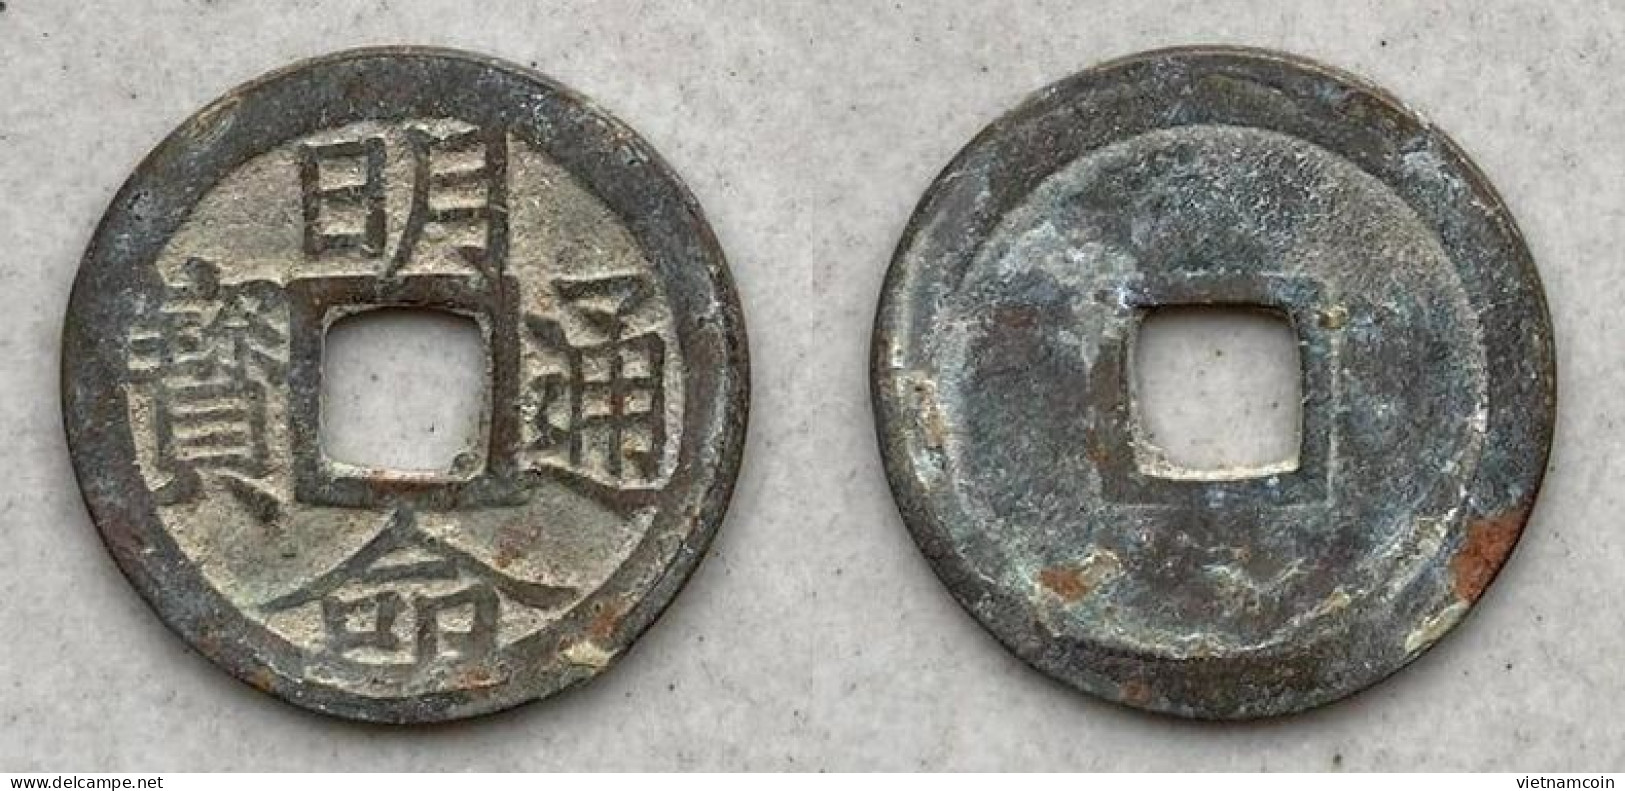 Ancient Annam Coin  Minh Mang Thong Bao 1820-1840  Dr. Allan Barker ,coin 101.7 - Vietnam